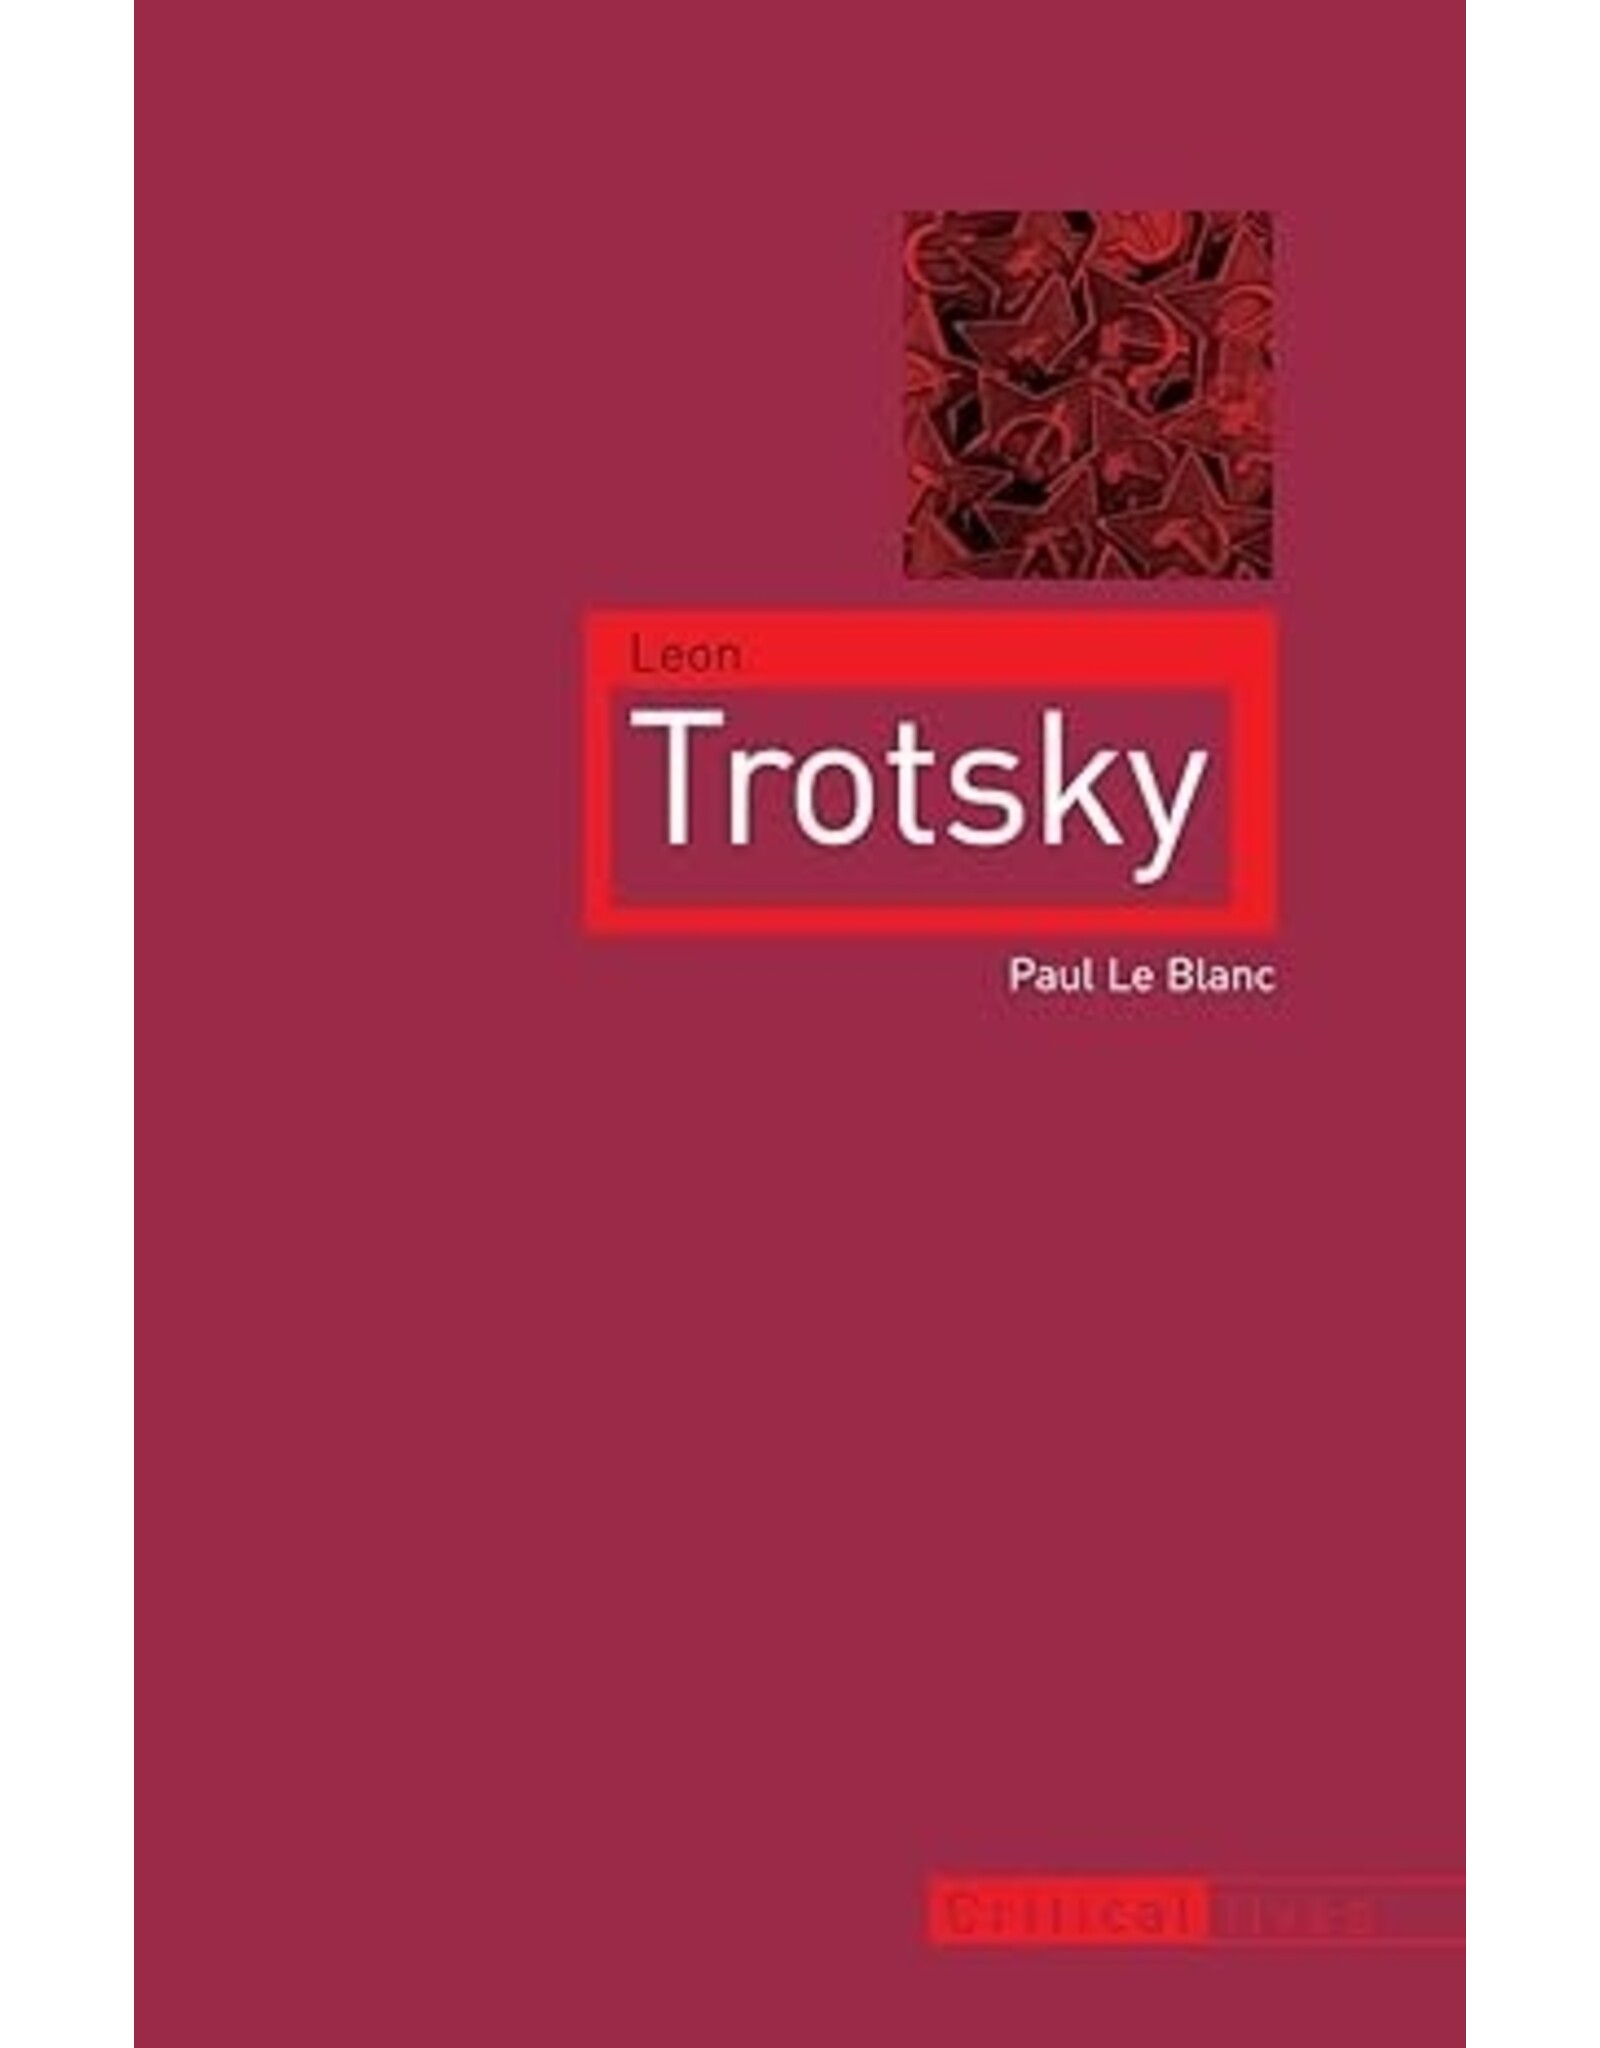 Critical Lives: Leon Trotsky